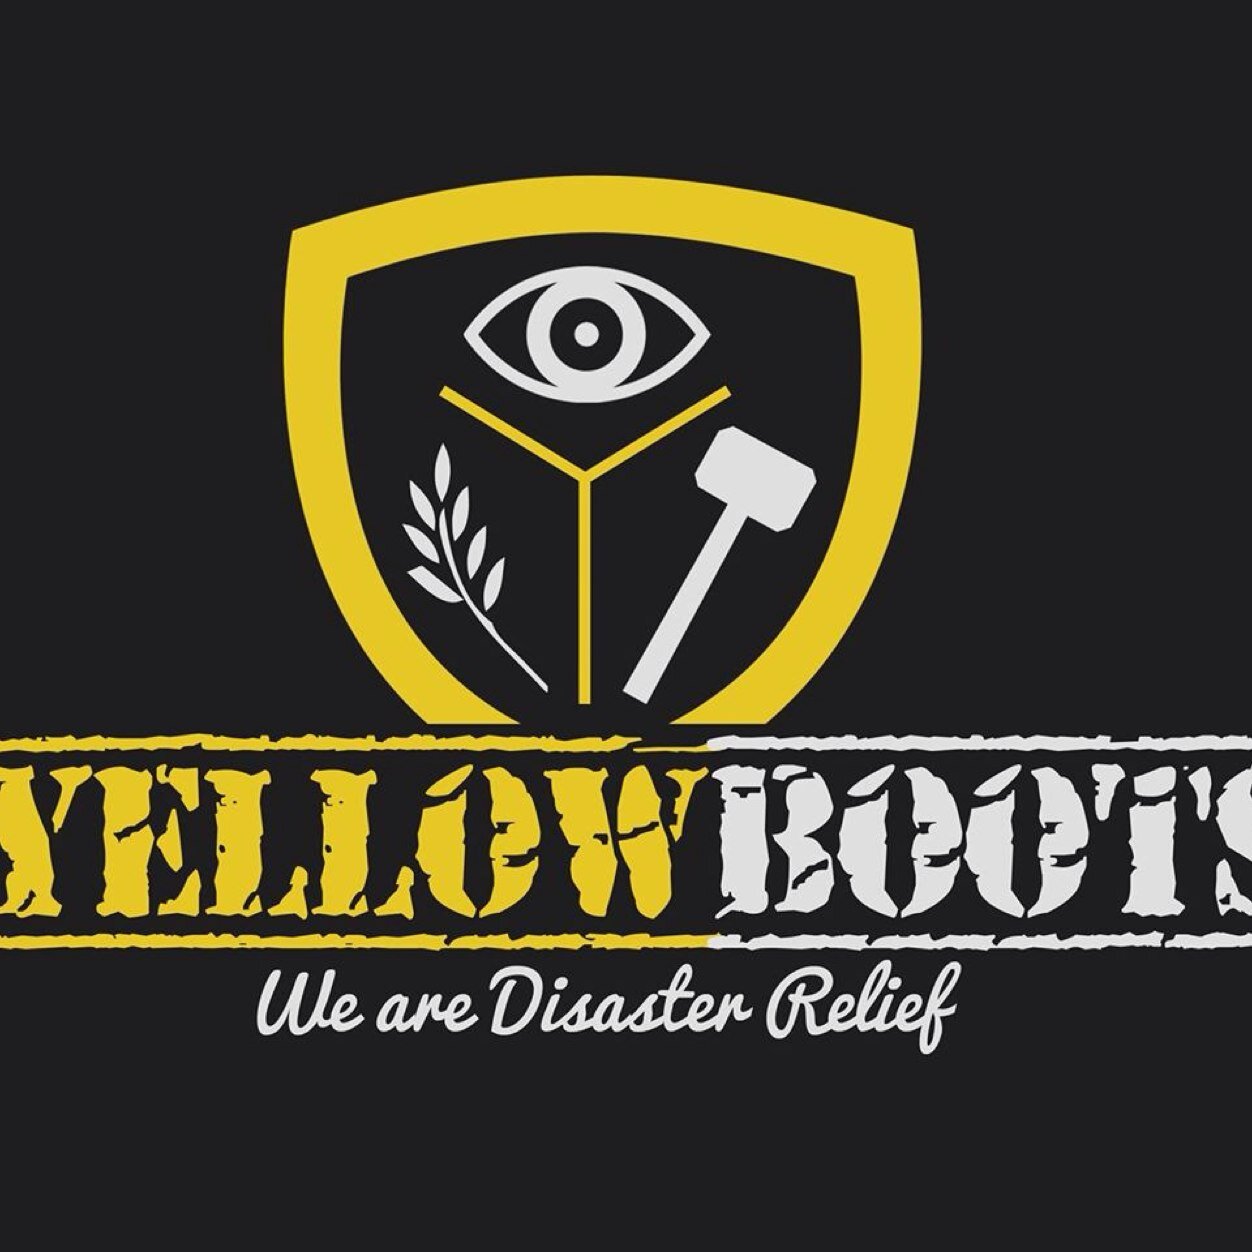 Yellow Boots USA